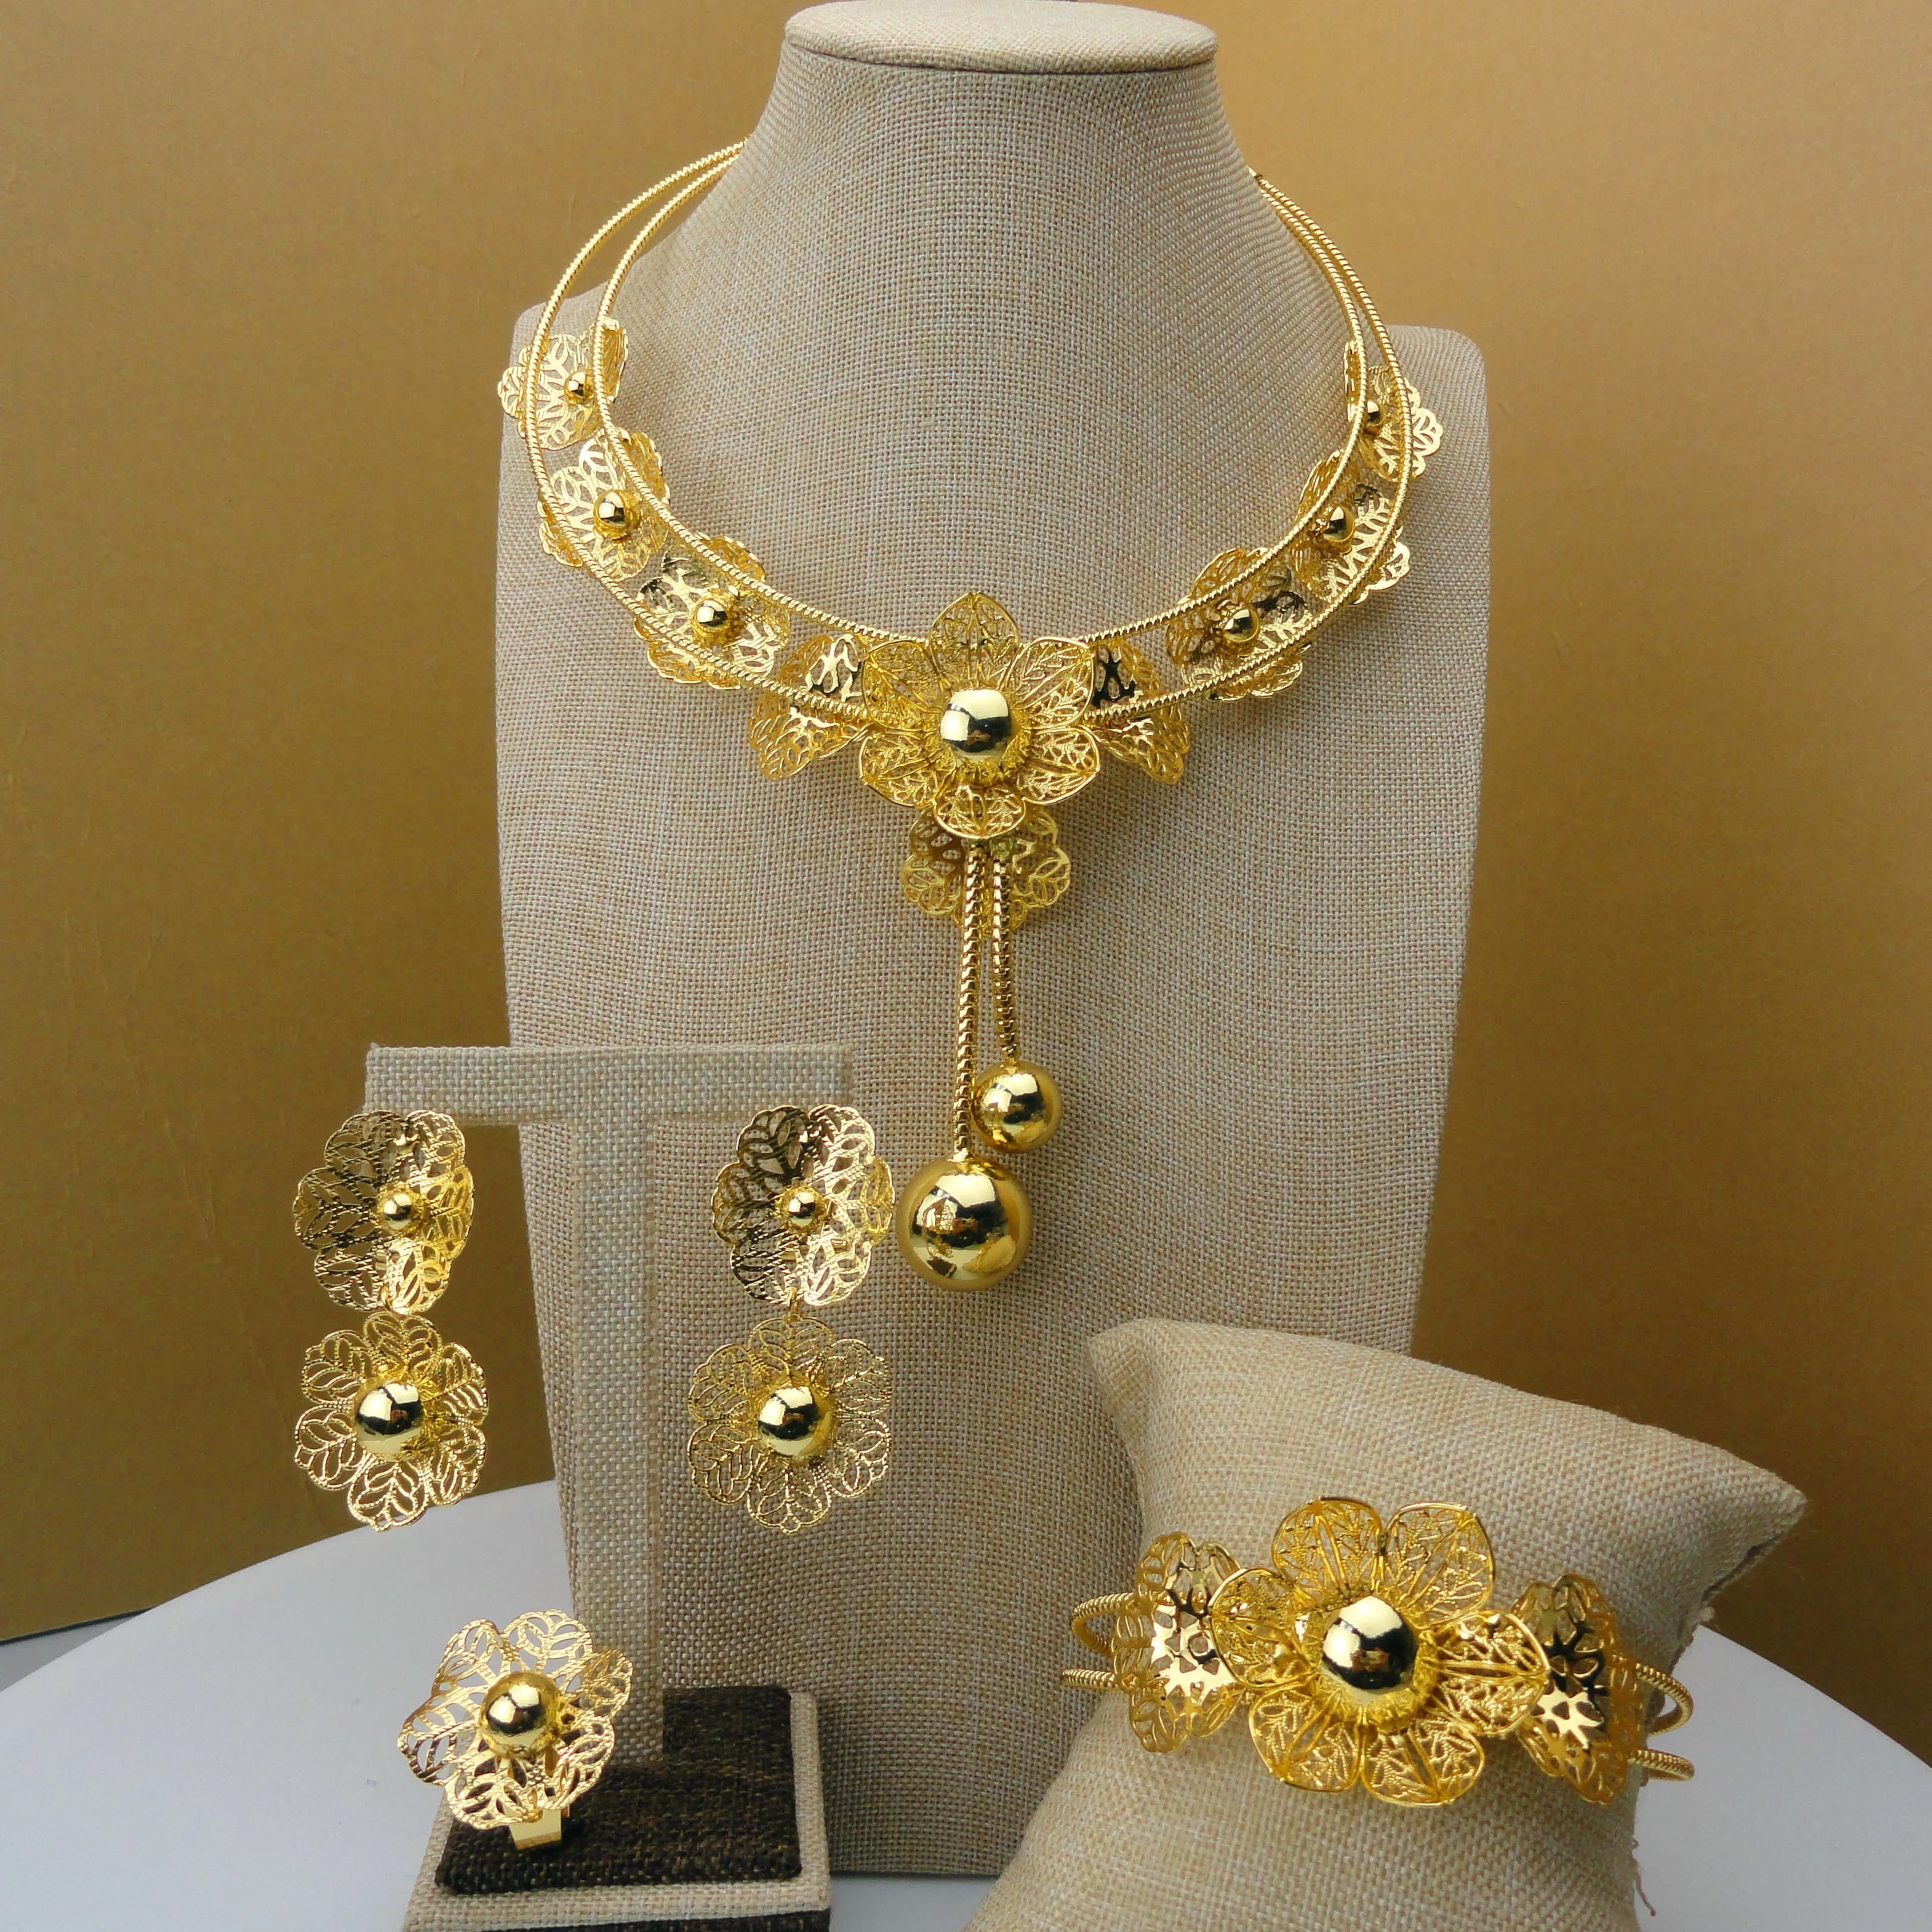 

Yuminglai Dubai Jewelry Sets Goldplate Jewelry for Women FHK5551, Any color